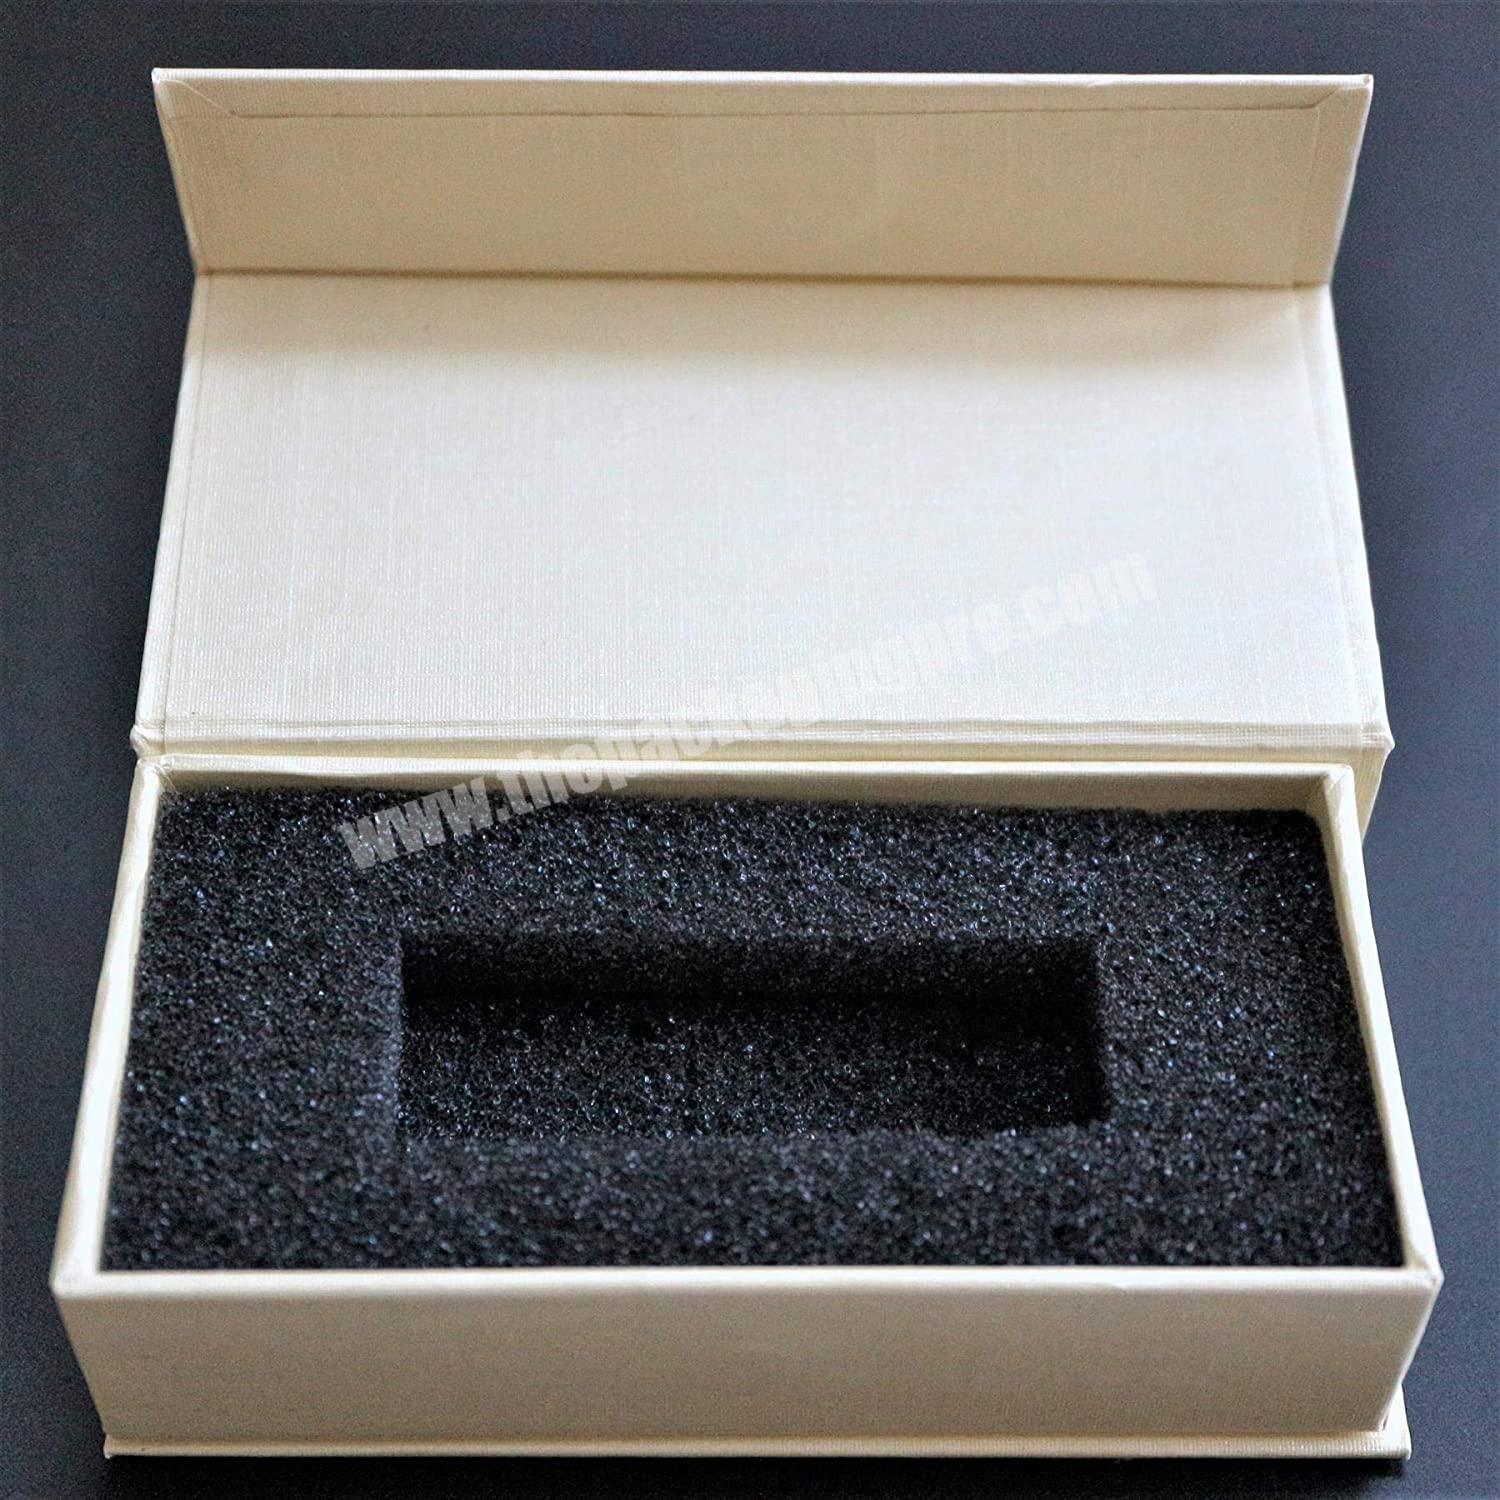 Magnetic USB Presentation Gift Boxes Cream Flash Drives Removable Drives Wedding USB Box